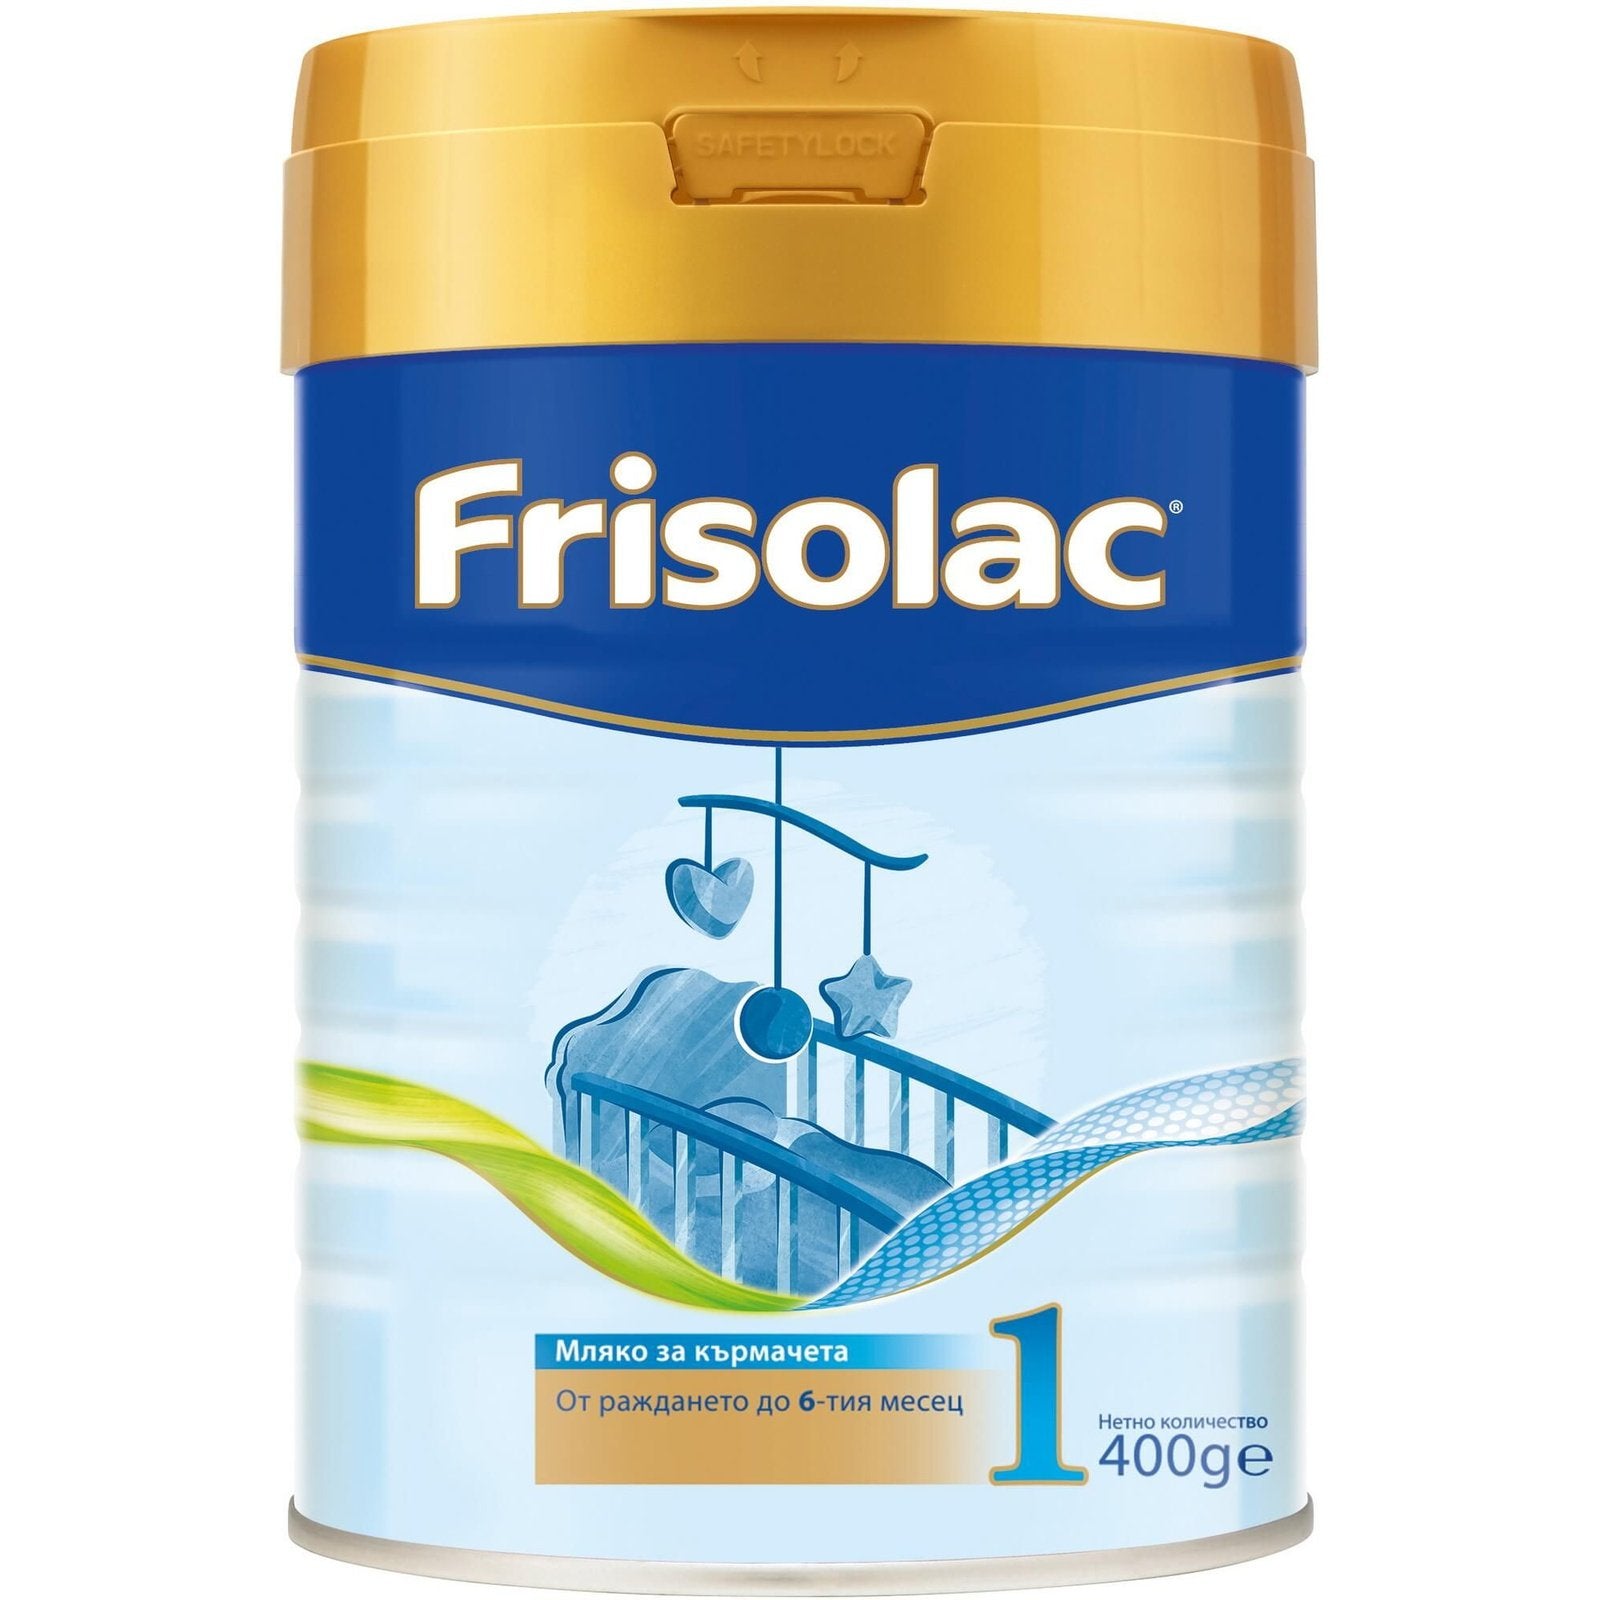 FRISOLAC 1 Мляко за кърмачета 0- 6 мес. 400 г valinokids